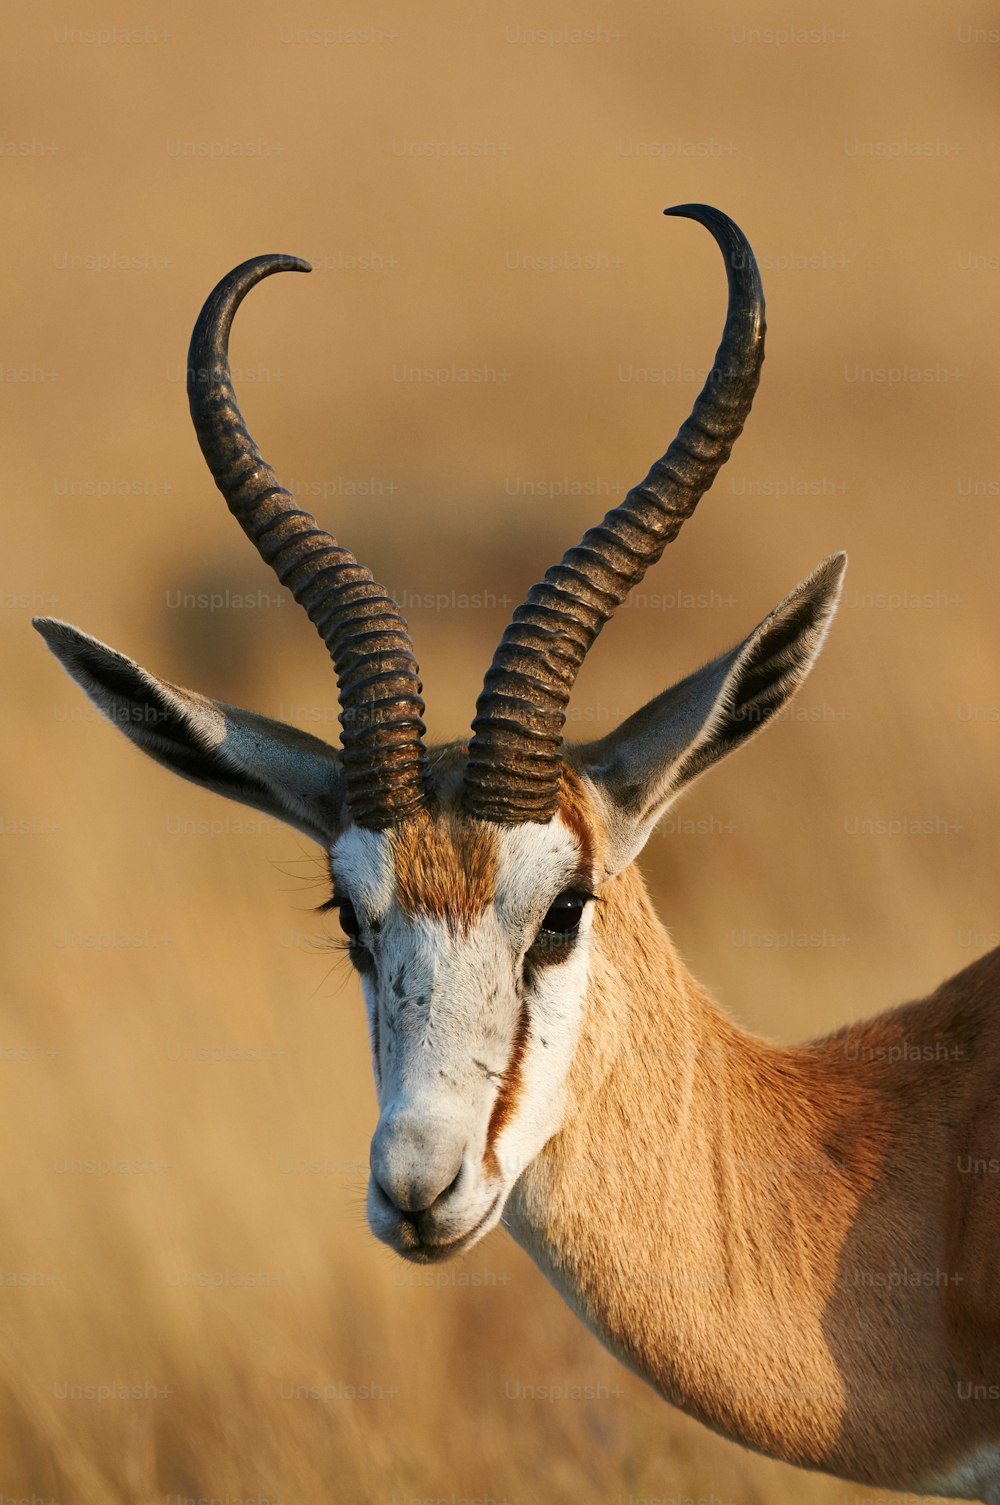 100+ Gazelle Pictures | Download Free Images on Unsplash